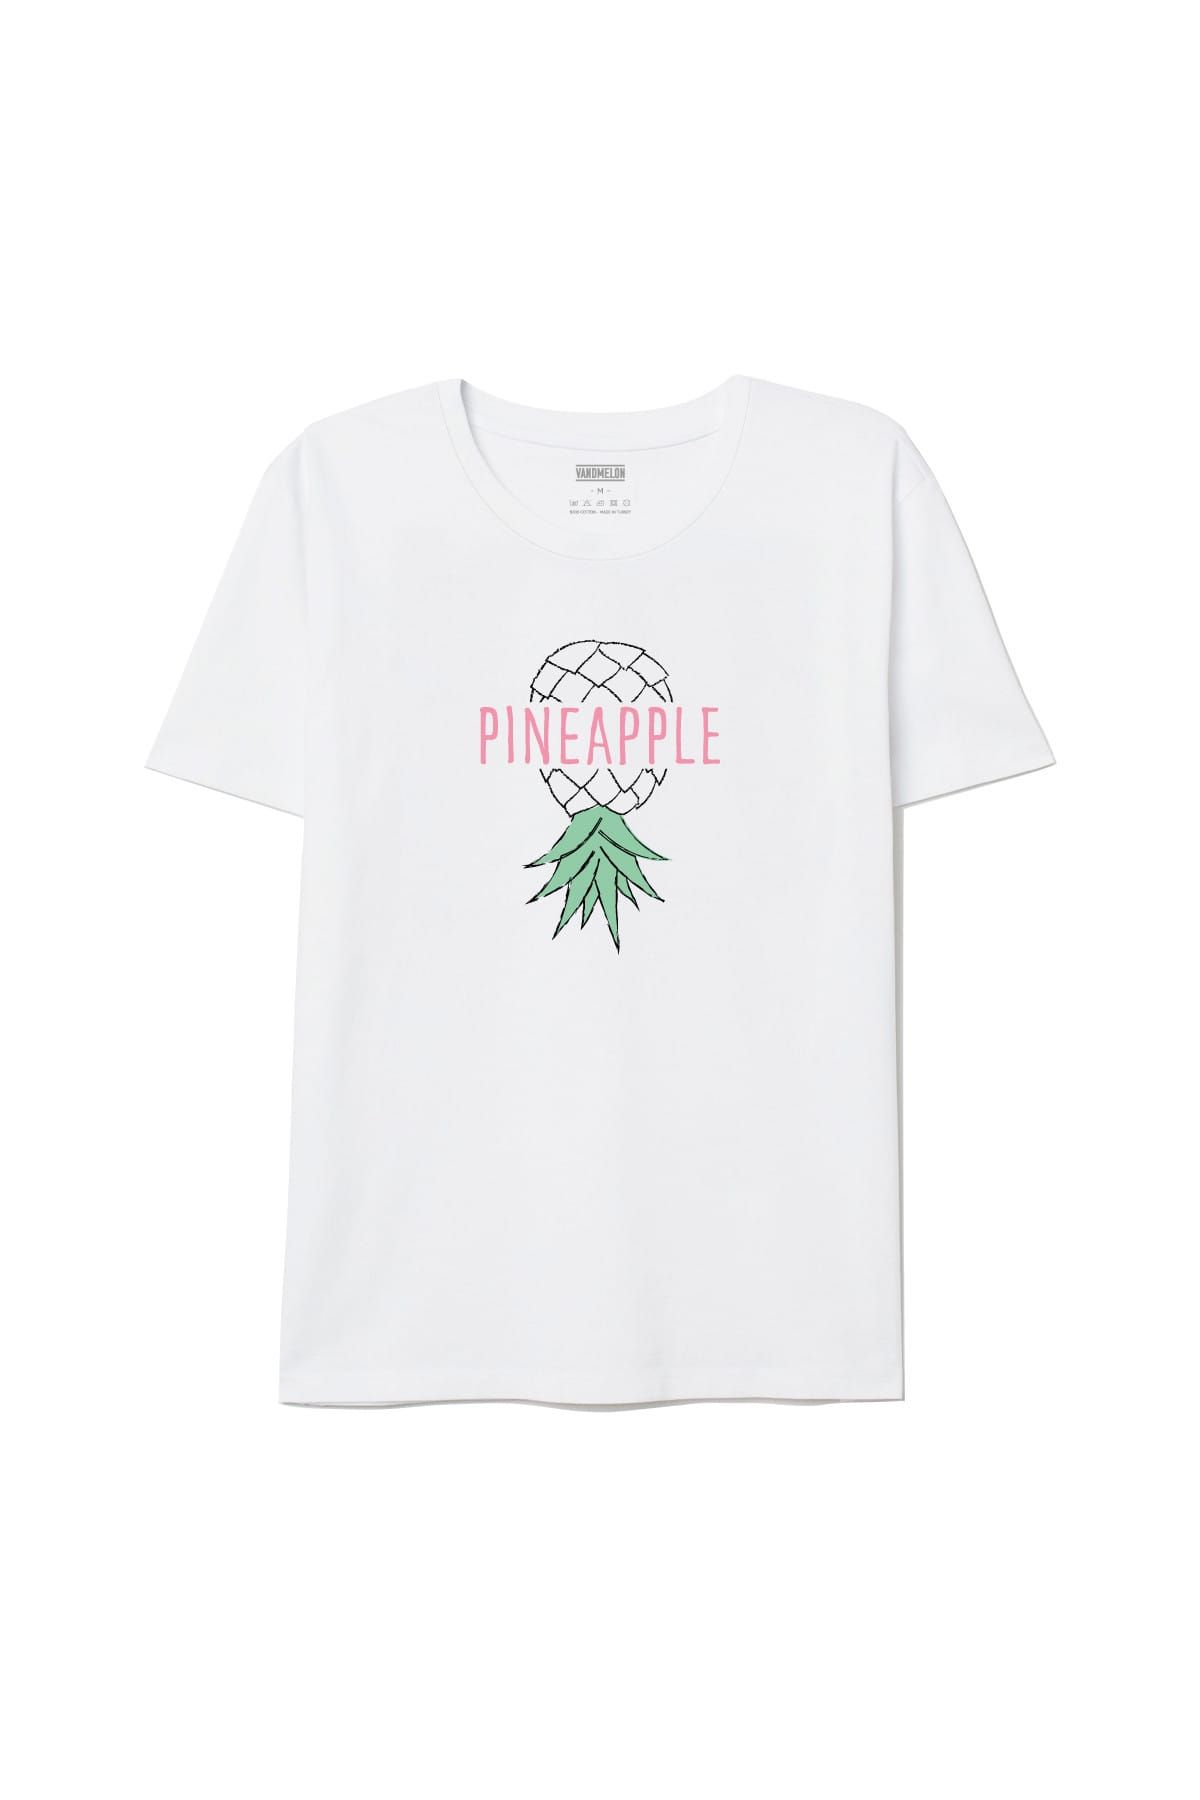 Vandmelon Unisex Pineapple Beyaz T-shirt VMU0106